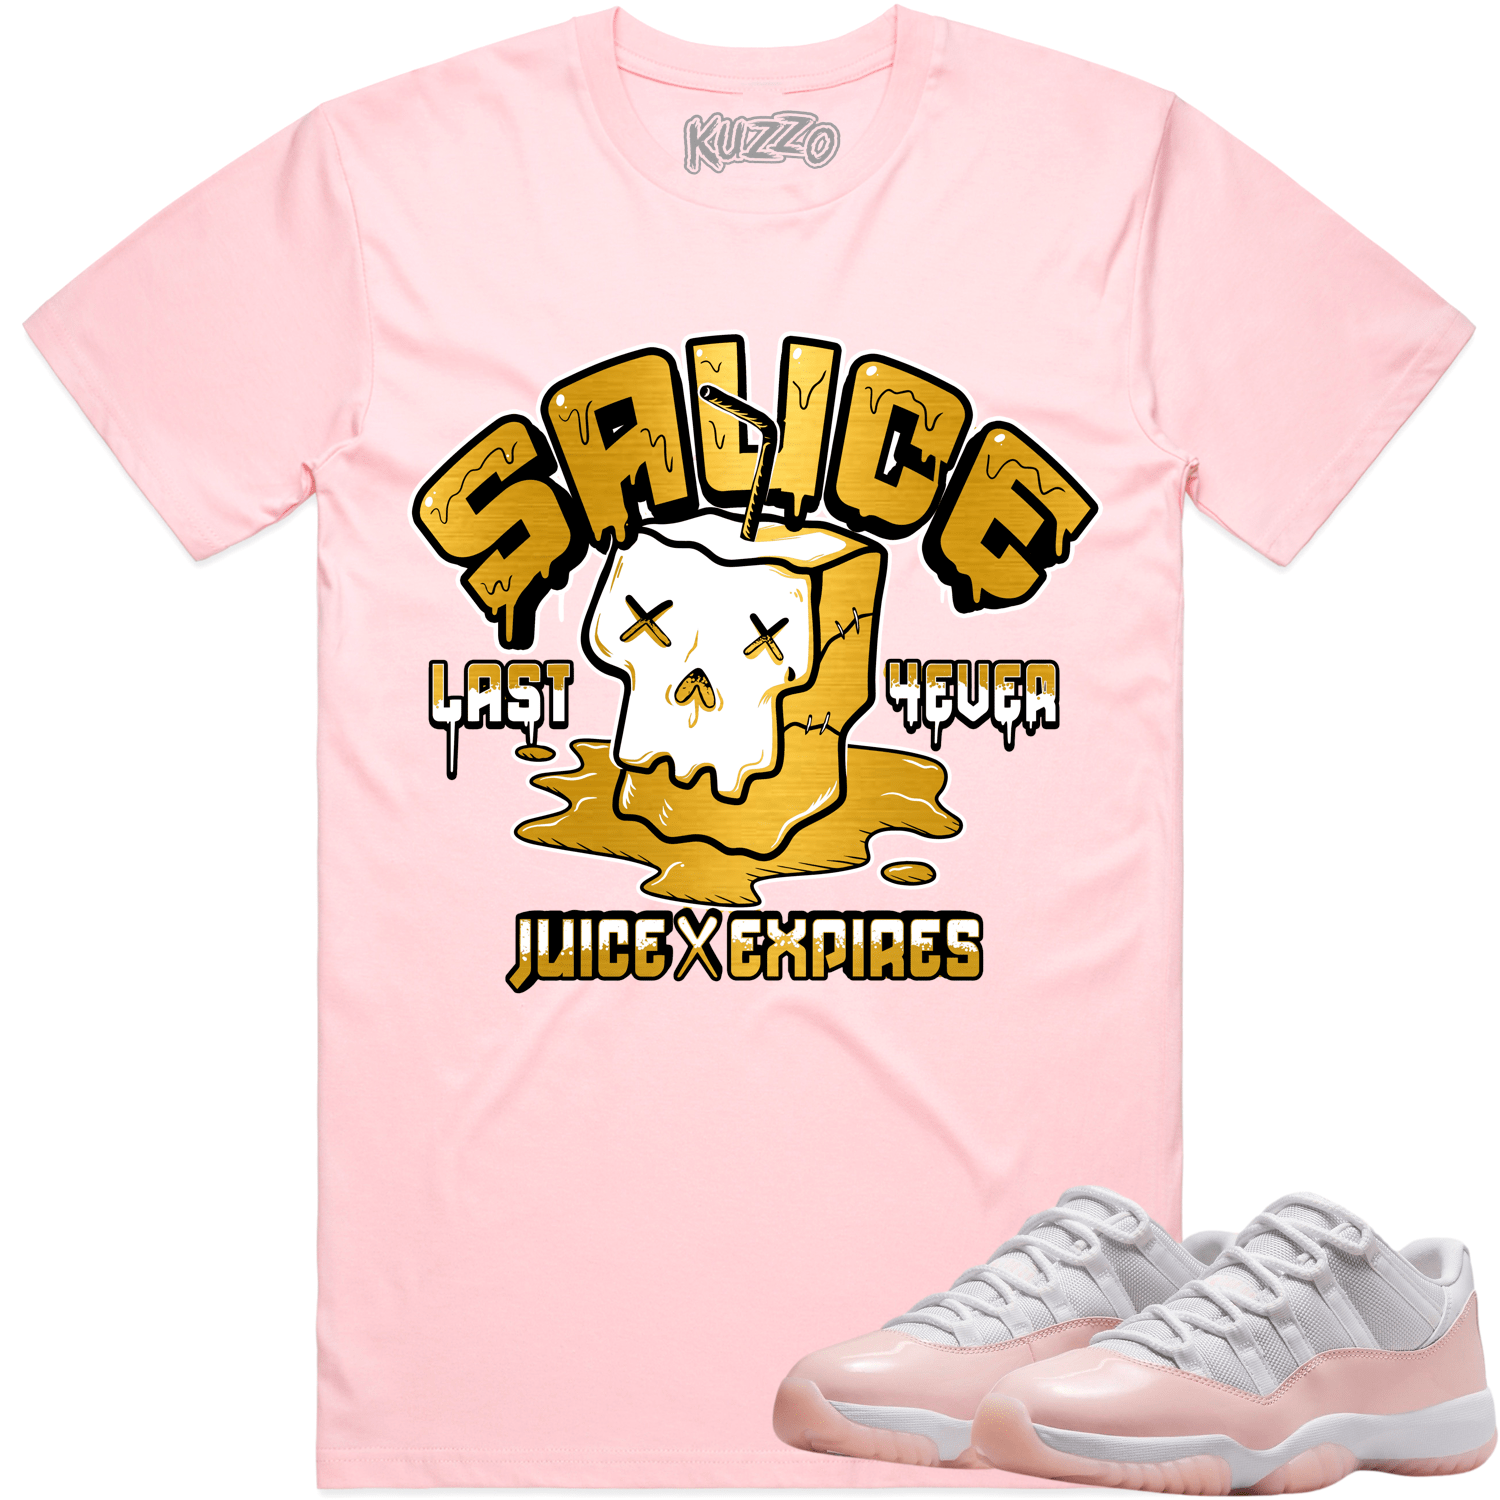 Legend Pink 11s Shirt - Jordan 11 Low Pink Sneaker Tees - Sauce